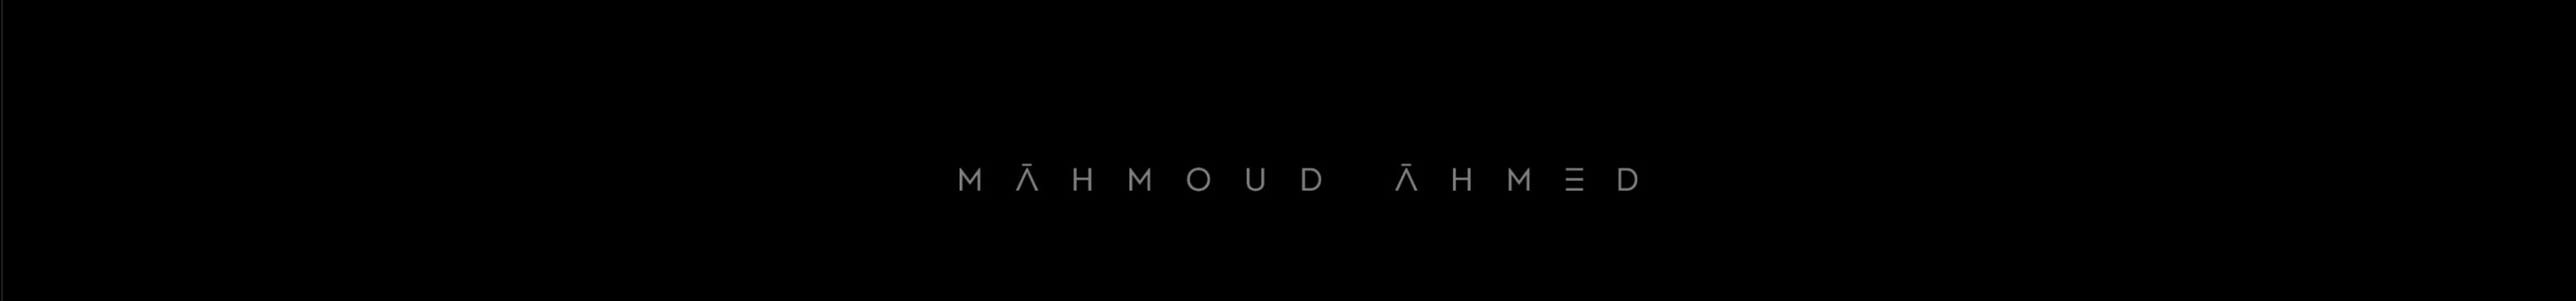 MAHMOUD AHMED's profile banner